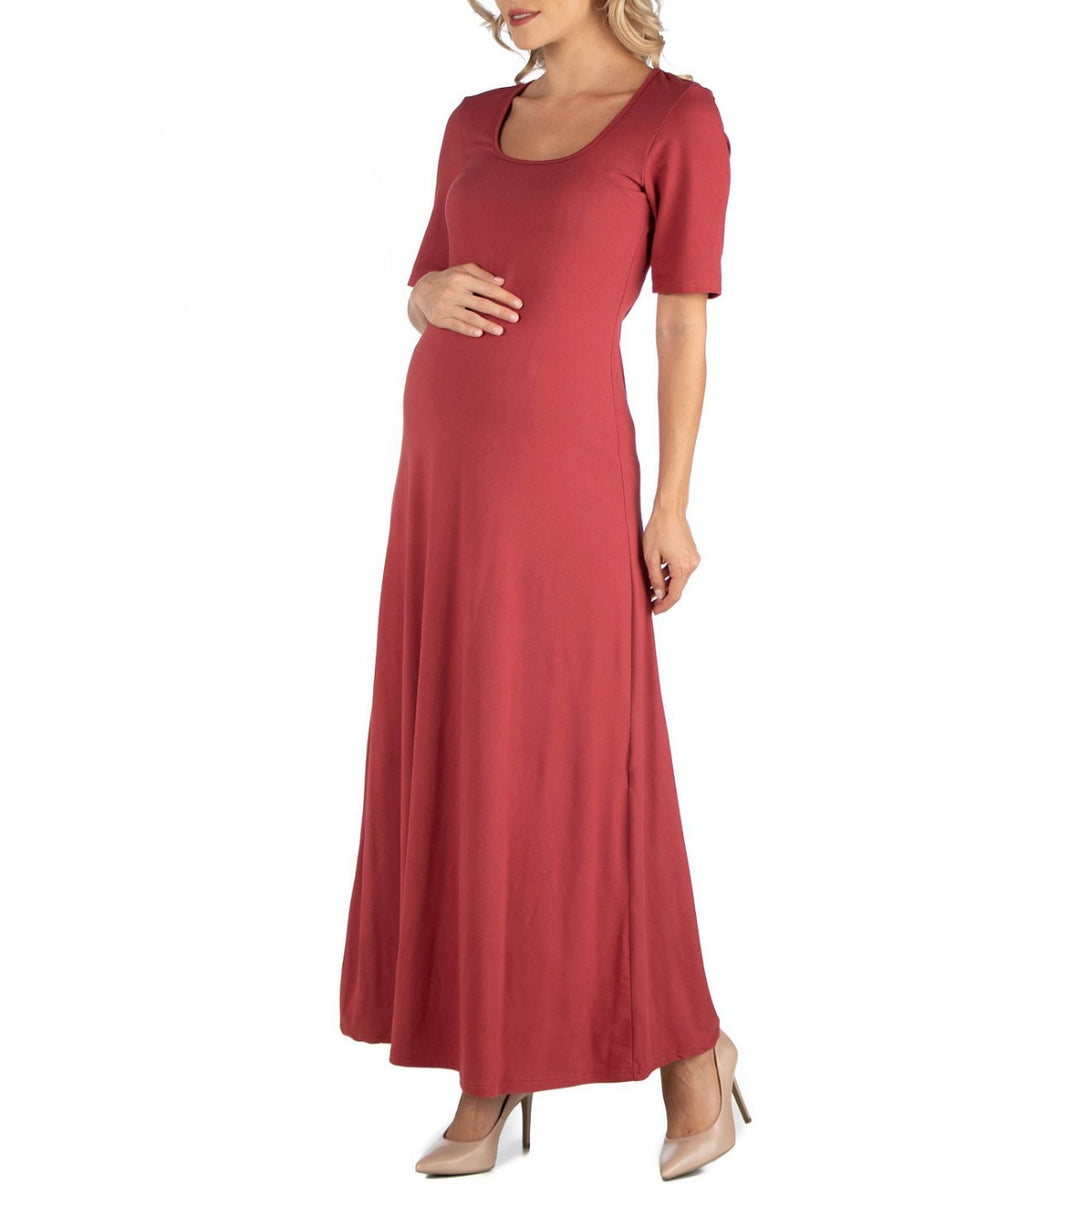 24Seven Comfort Apparel Women's 3/4 Sleeves Casual Maxi Dress Brick Size L